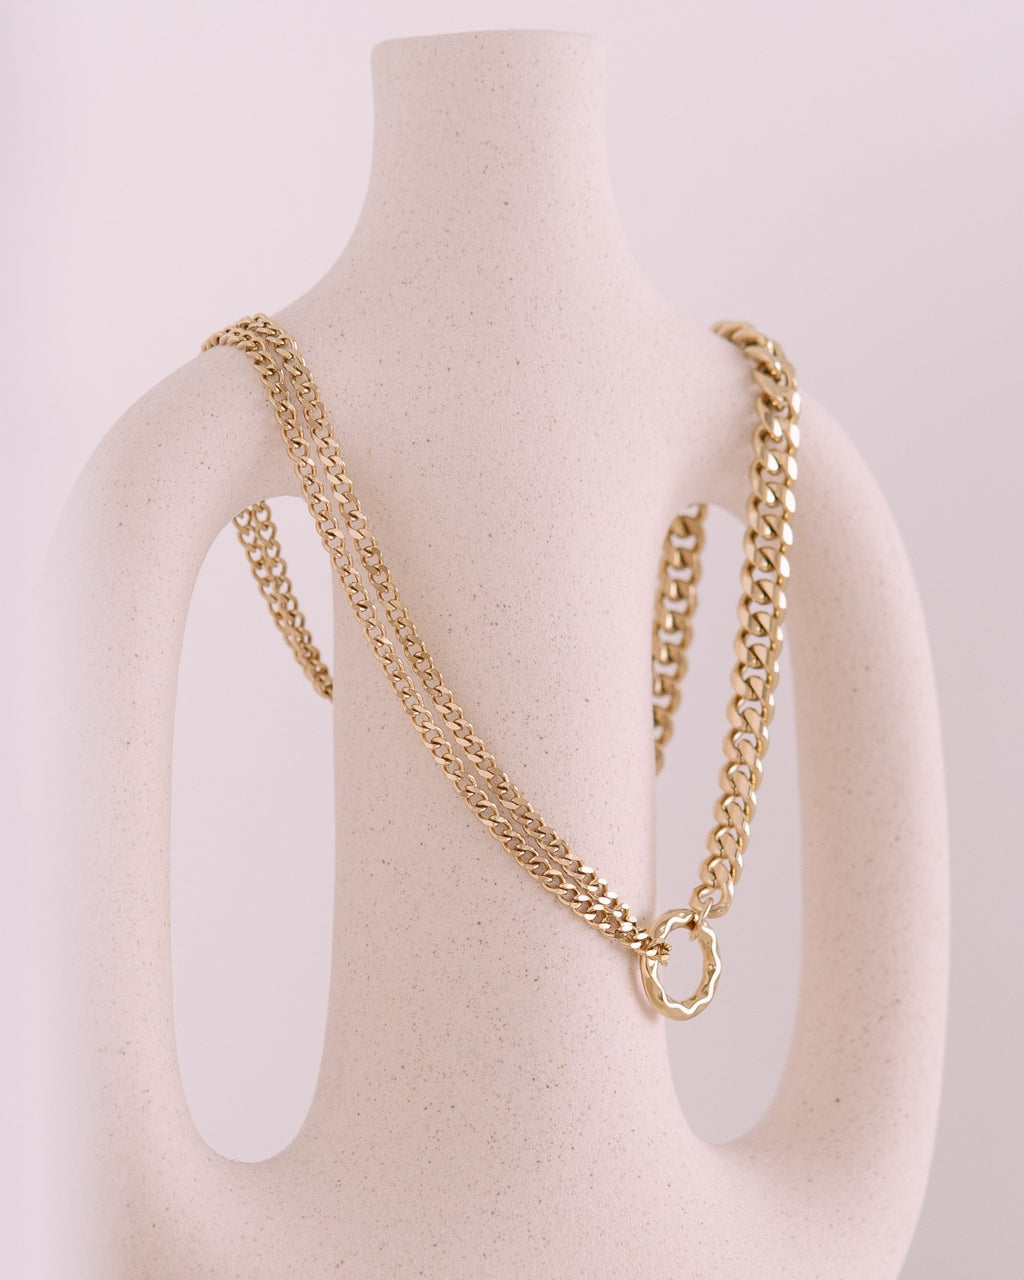 Elegant rebel chain necklace